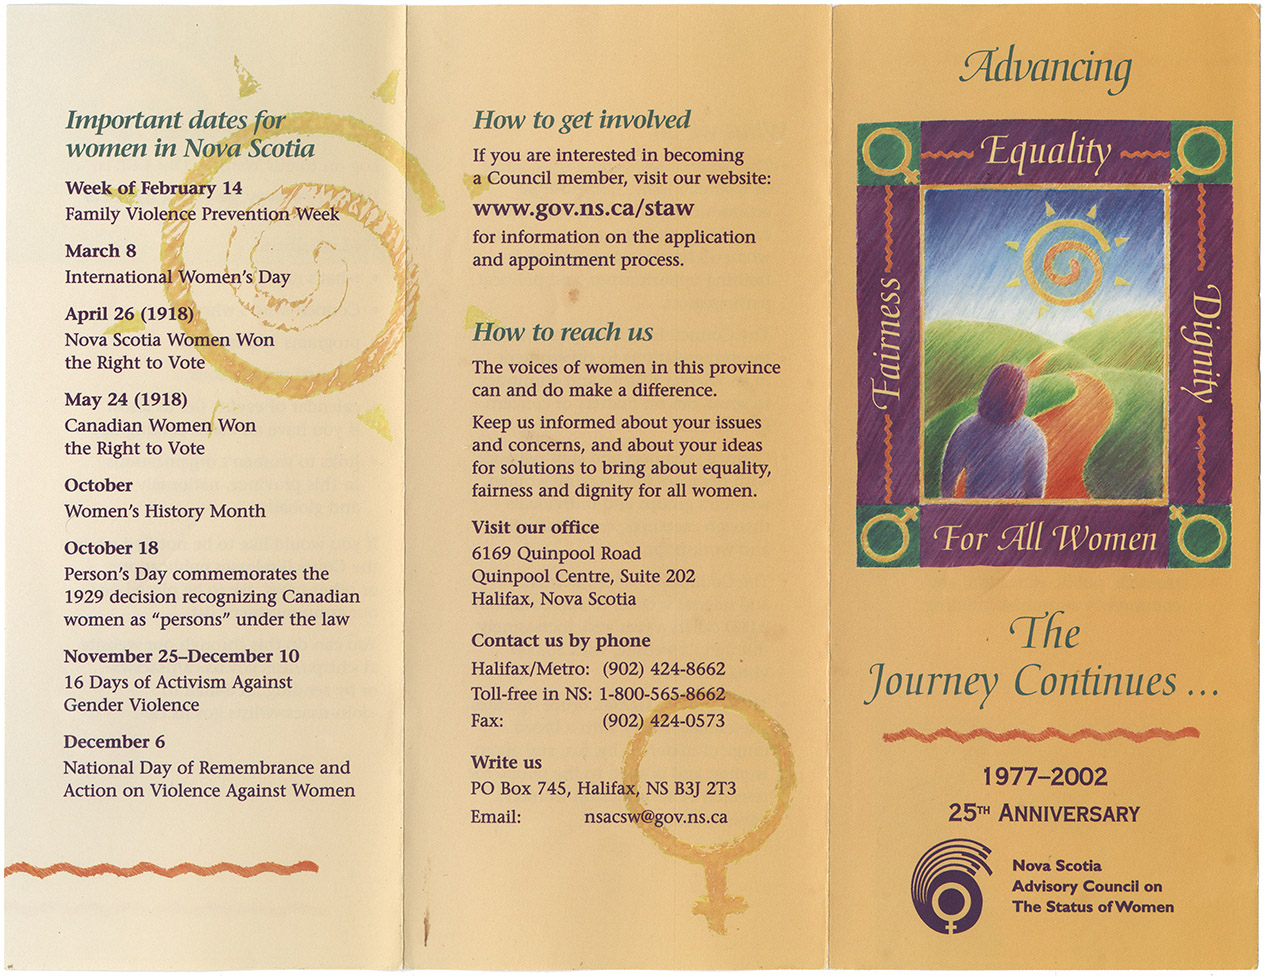 communityalbums - Nova Scotia Advisory Council on the Status of Women 25th Anniversary pamphlet